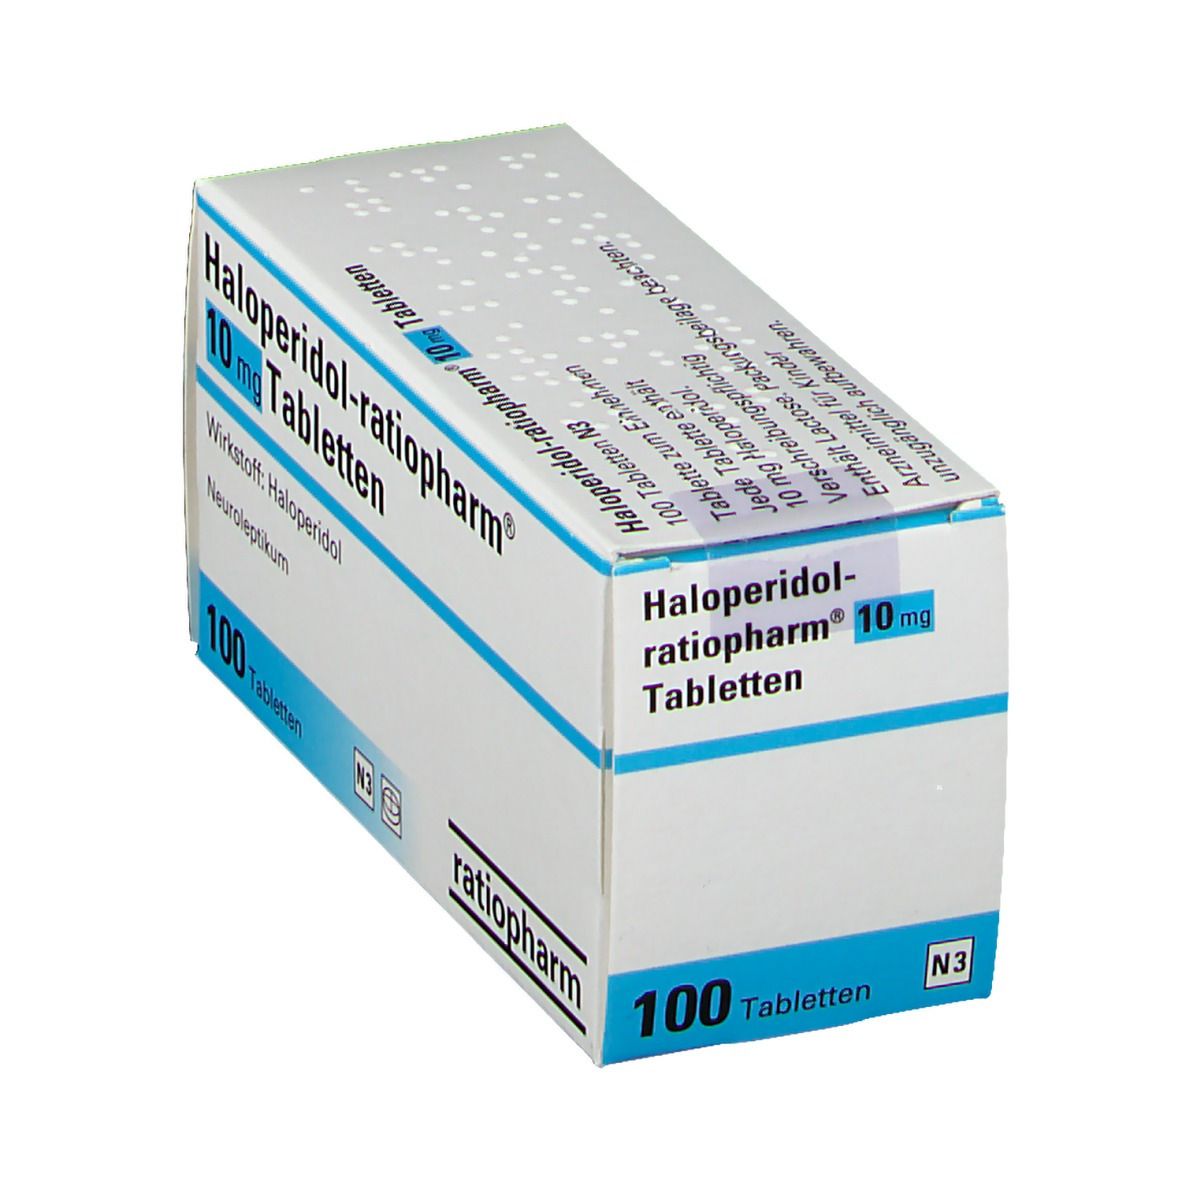 Haloperidol-ratiopharm® 10 mg